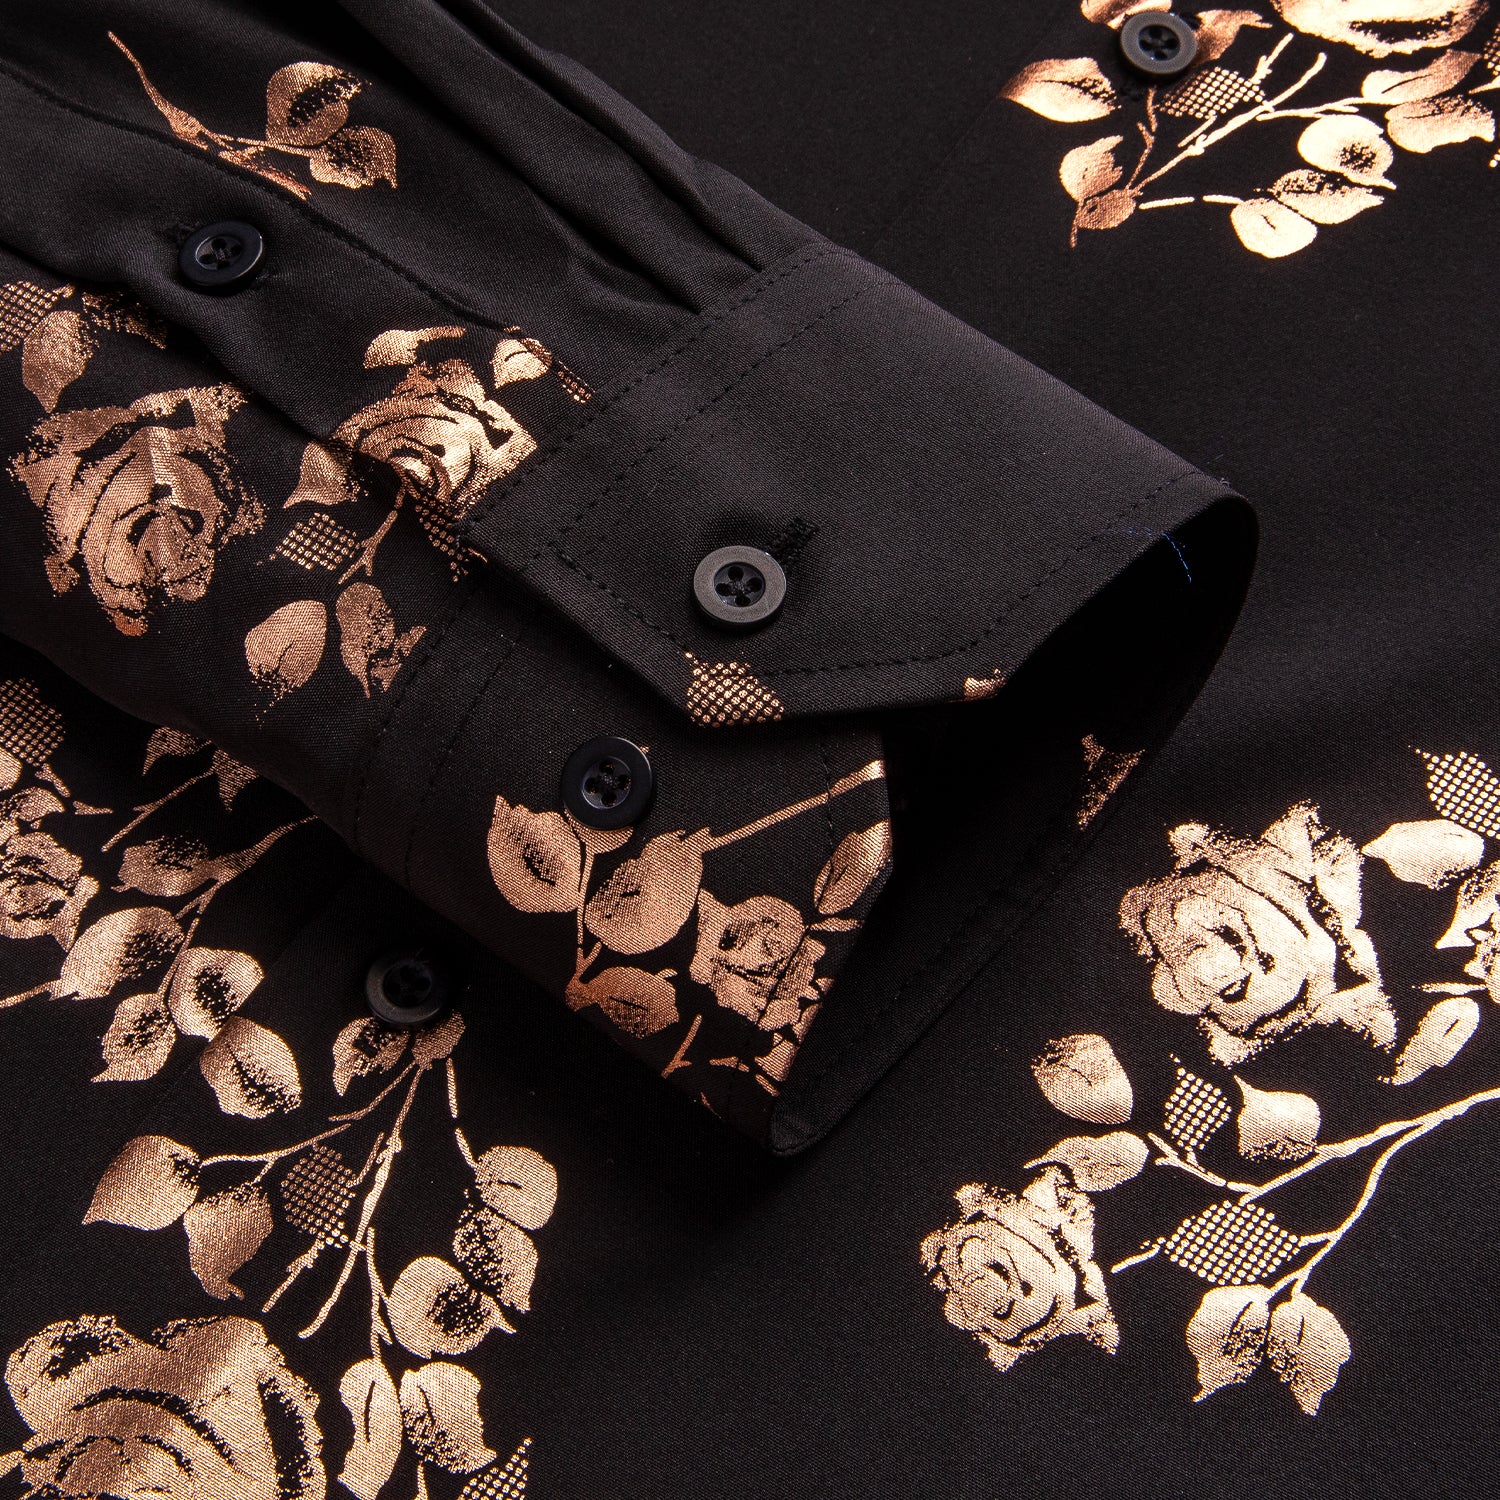 Black Rose Gold Floral Silk Men's Long Sleeve Shirt